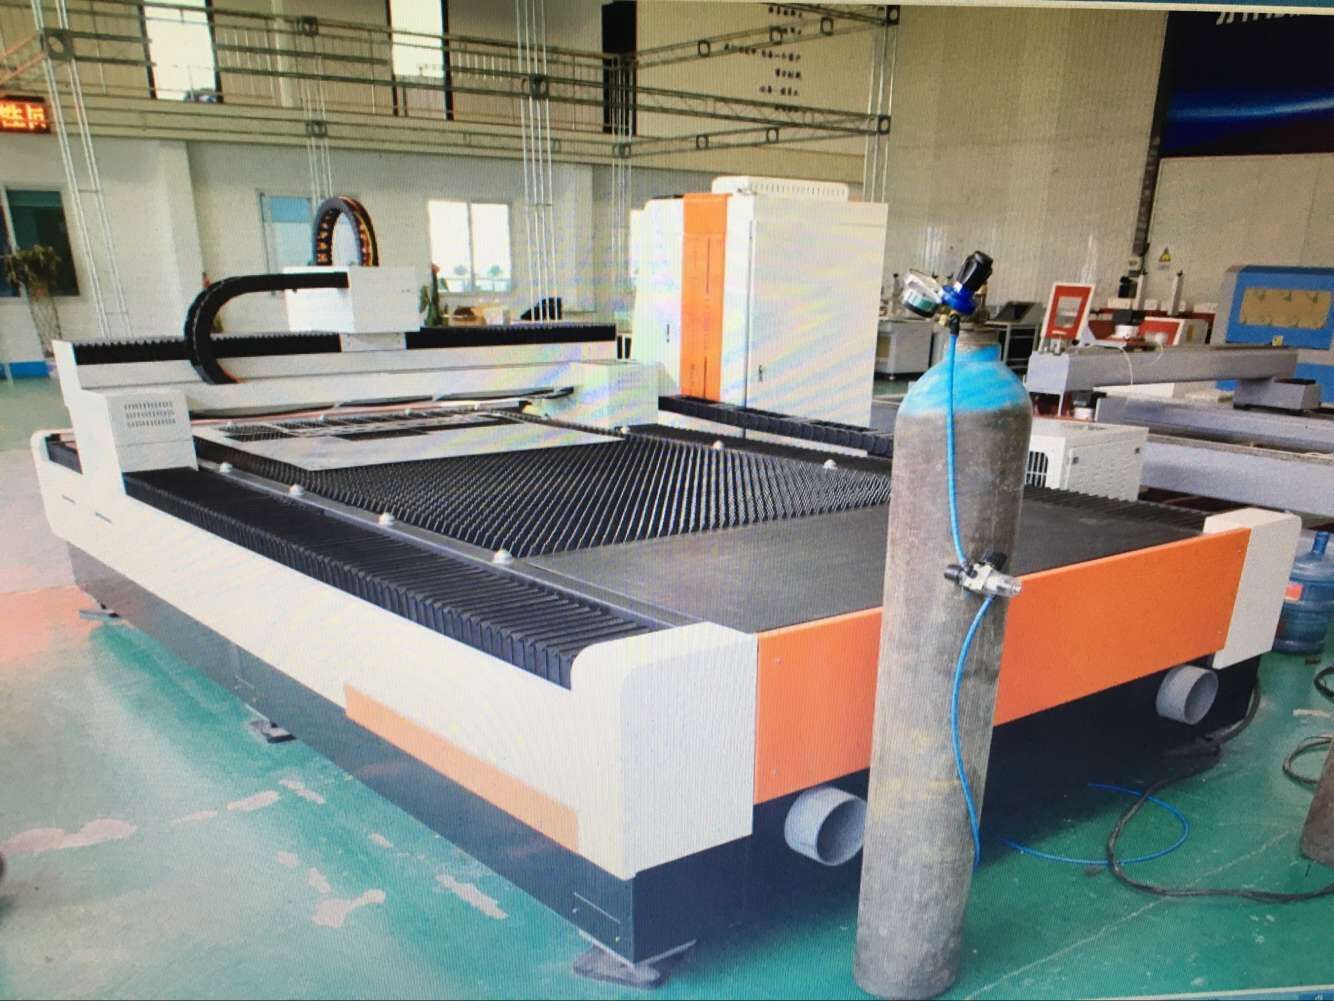 1325 1530 fiber laser cutting machine carding filling machine for metal